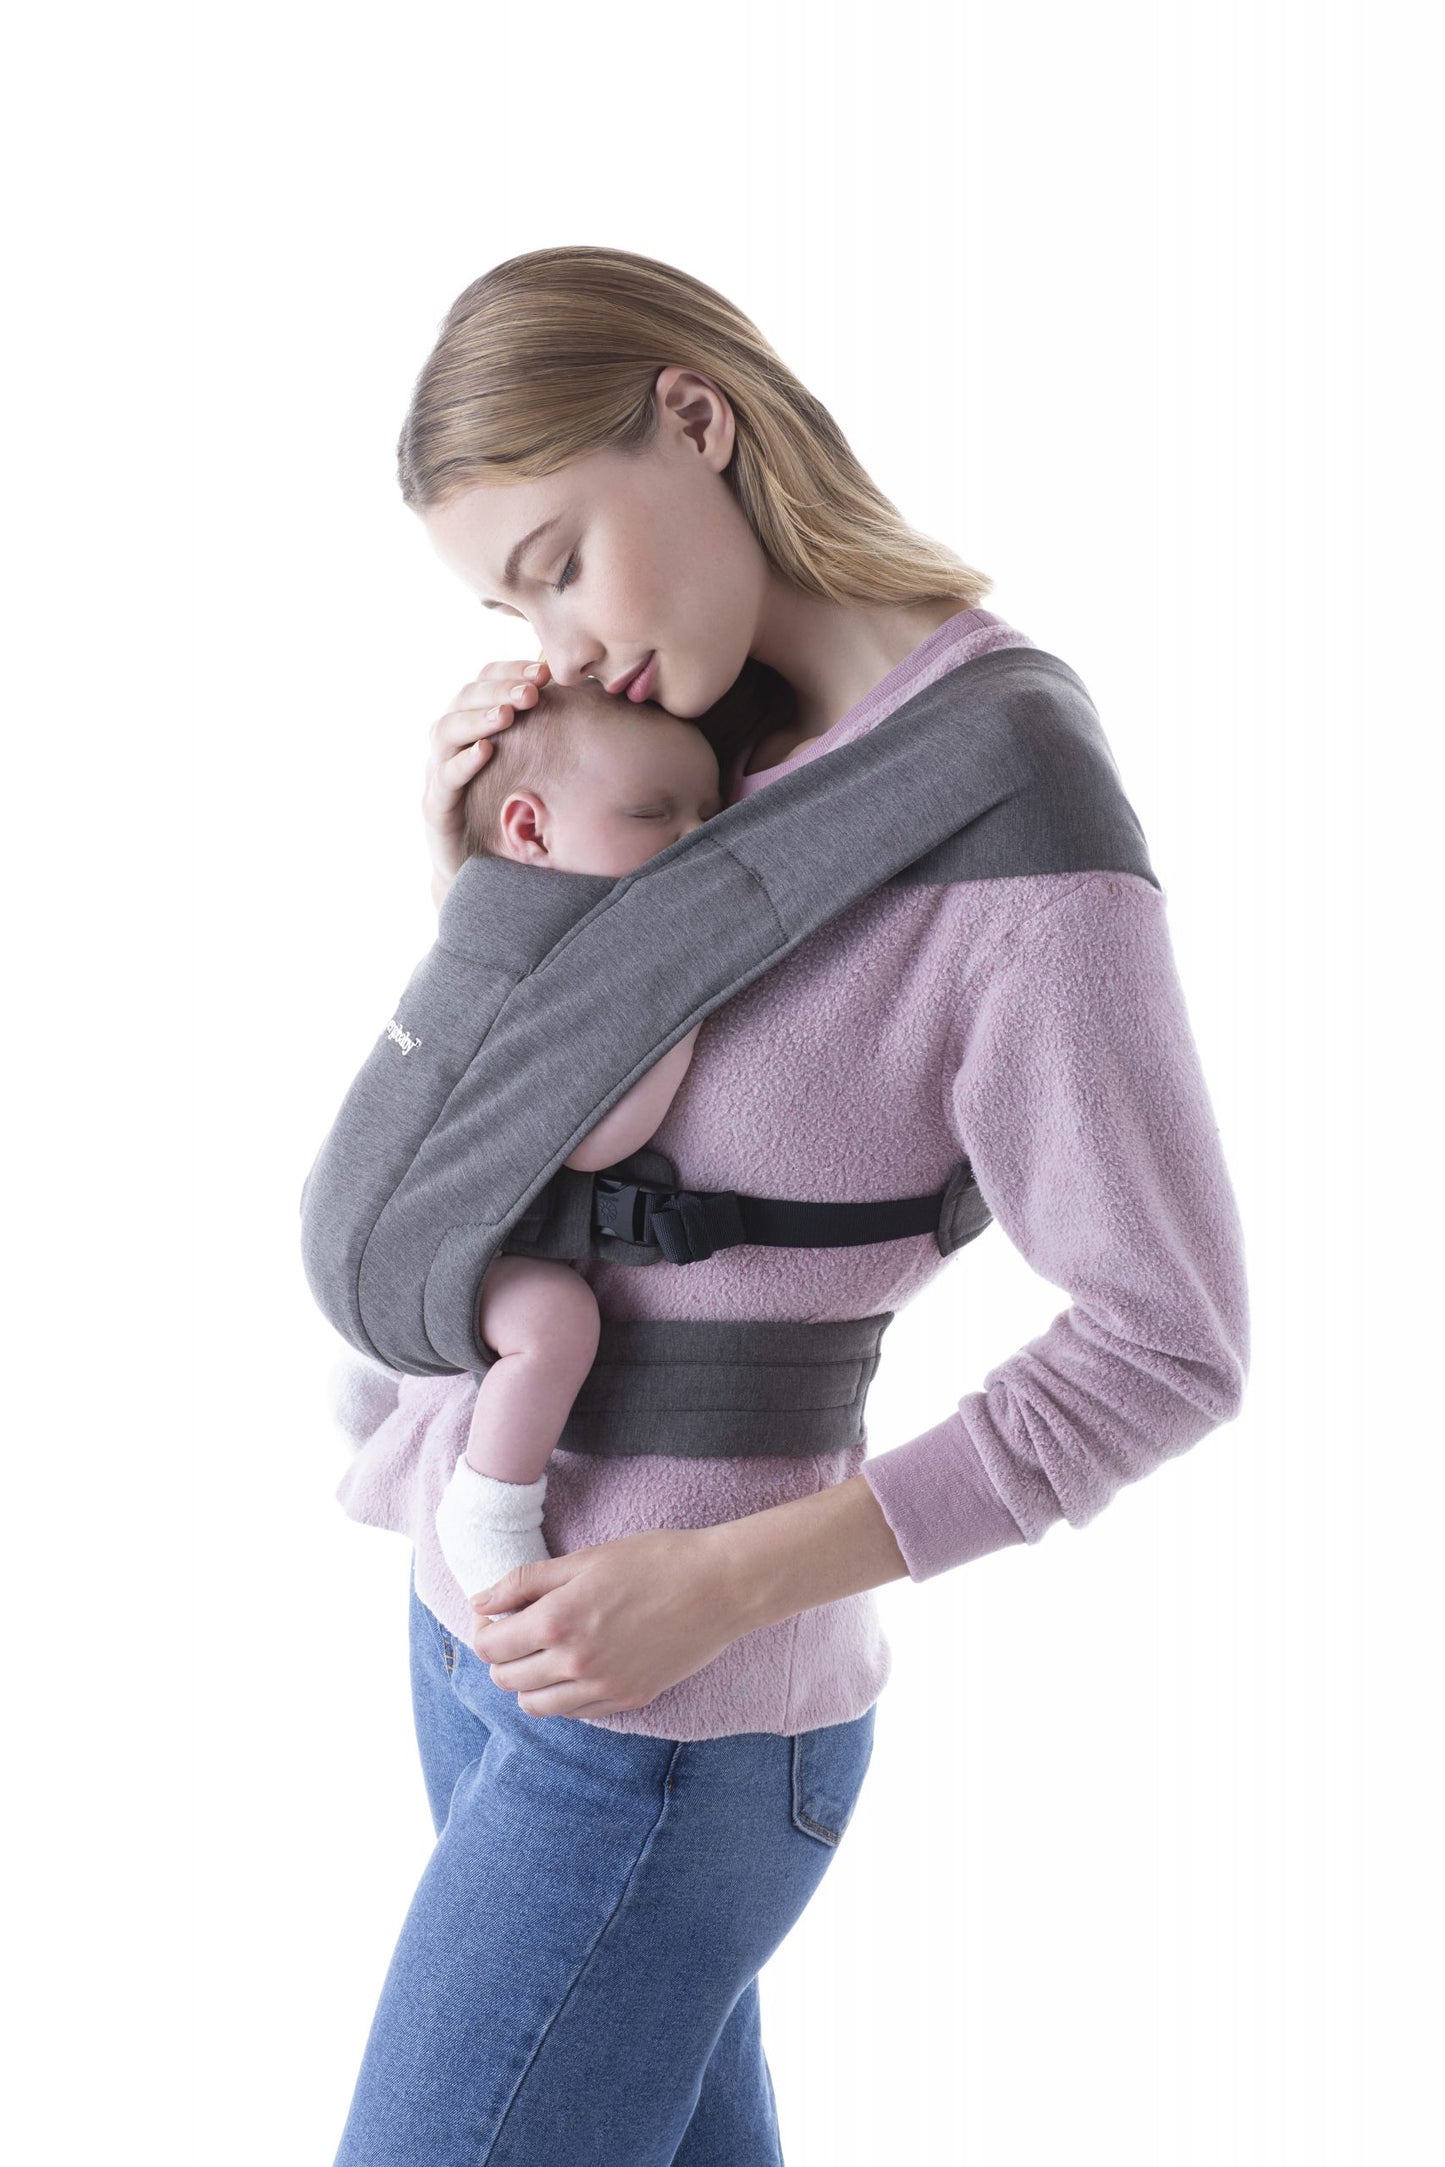 Ergobaby Embrace Newborn Carrier grey